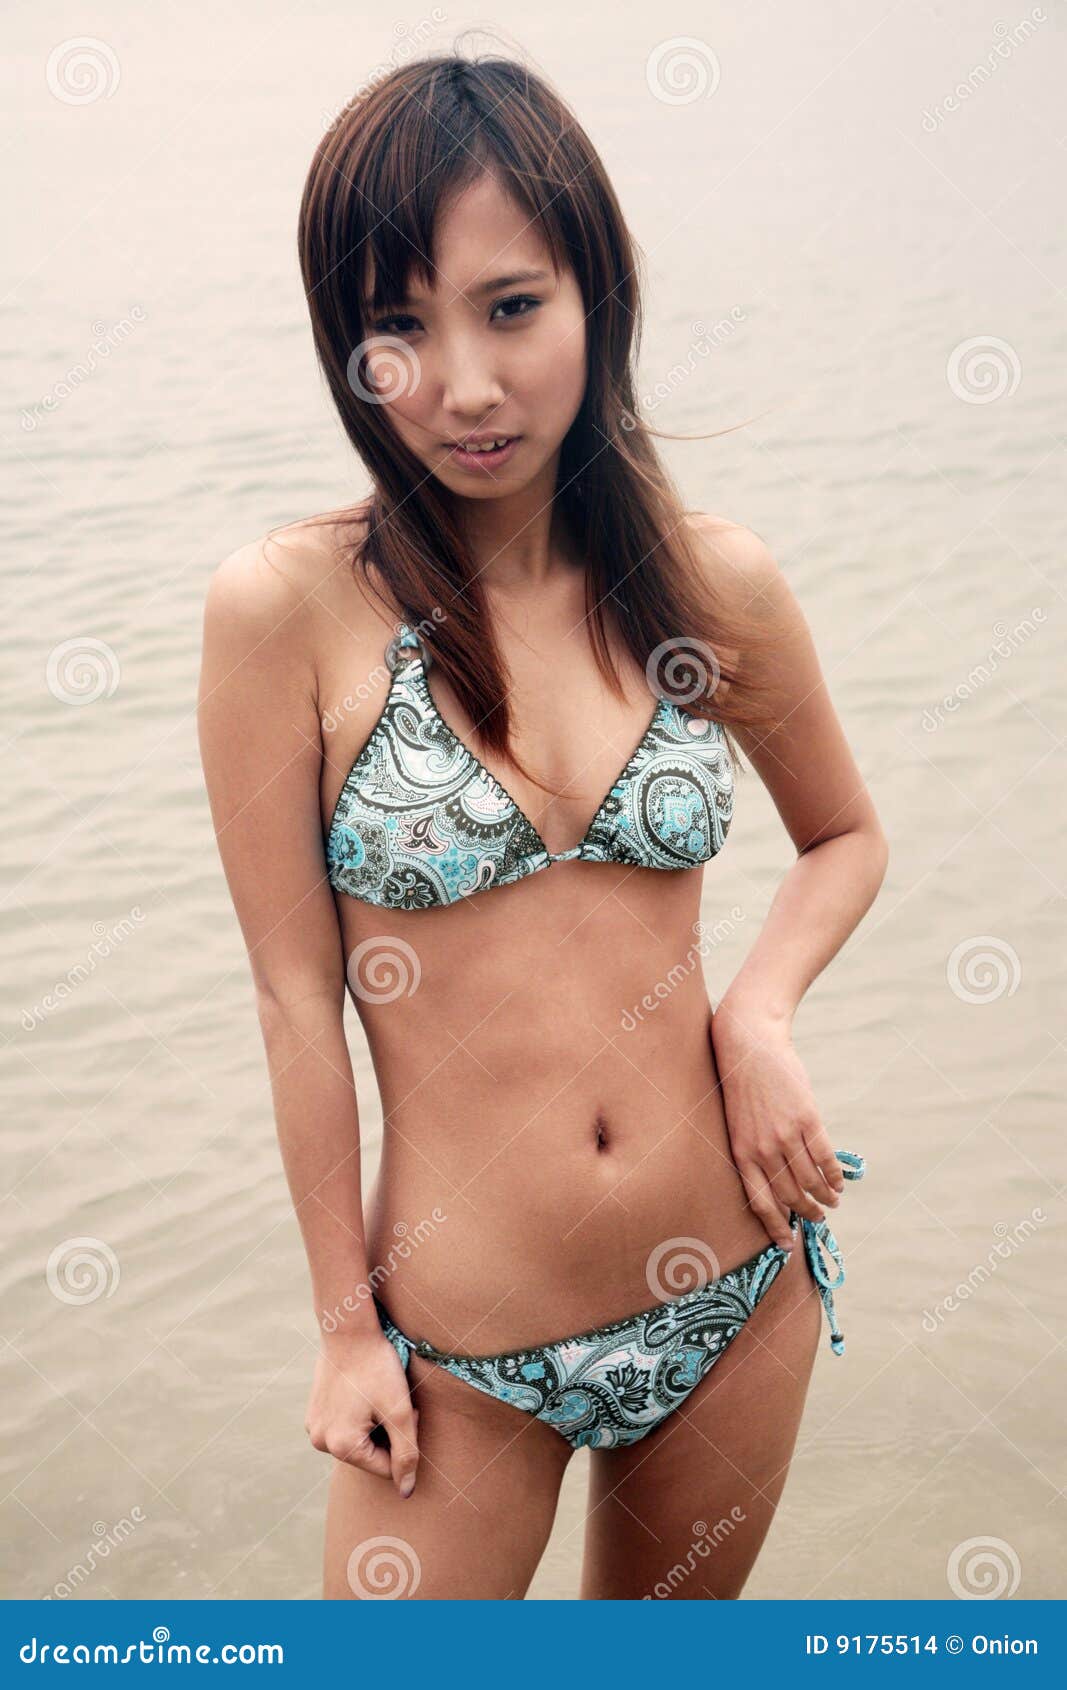 Cute Asian Girl In A Bikini Stock Images Image 9175514